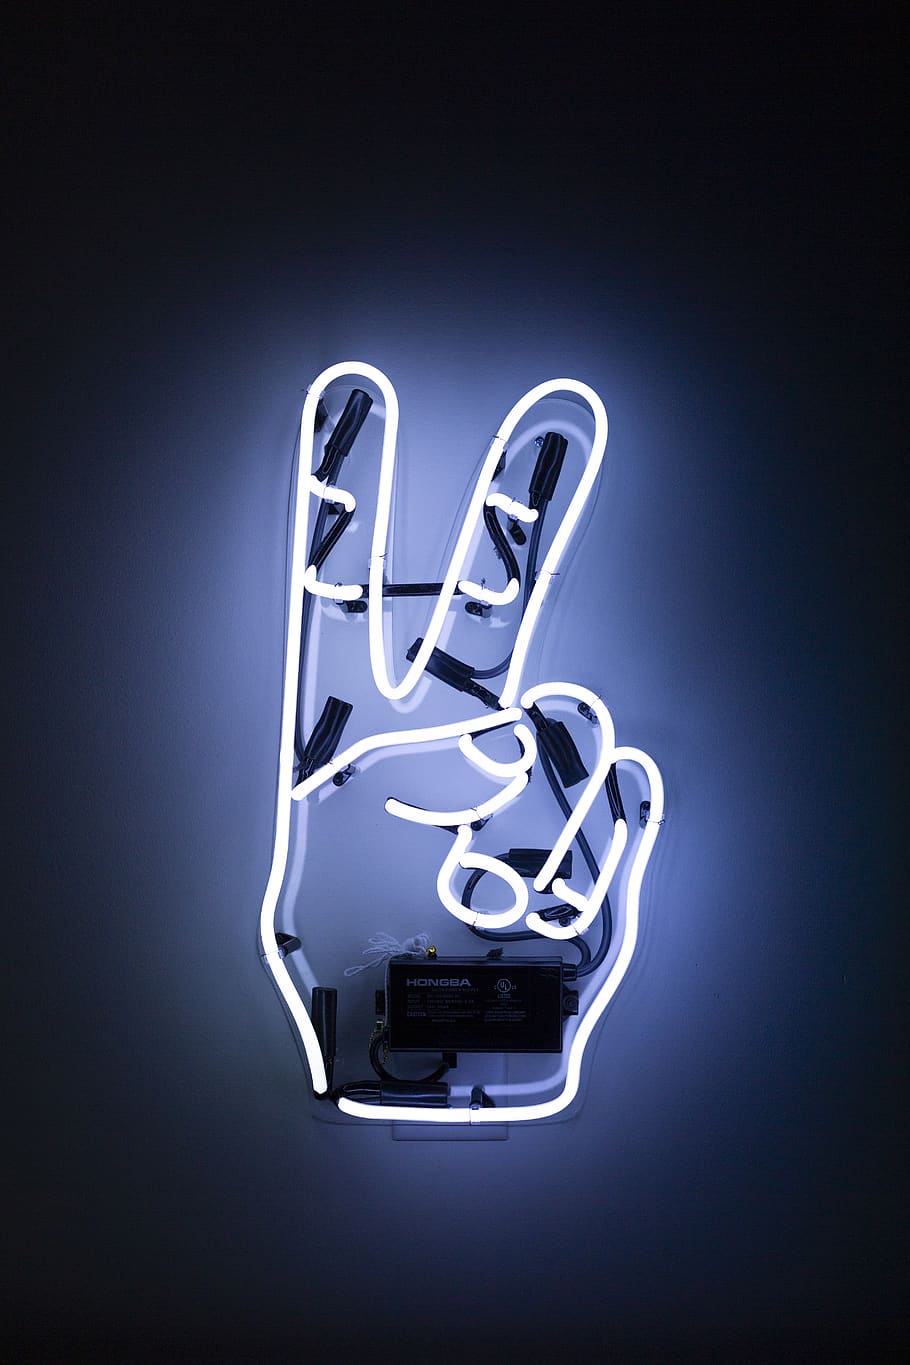 Neon Sign 1080p 2k 4k 5k Hd, Neon Peace Sign Lamp